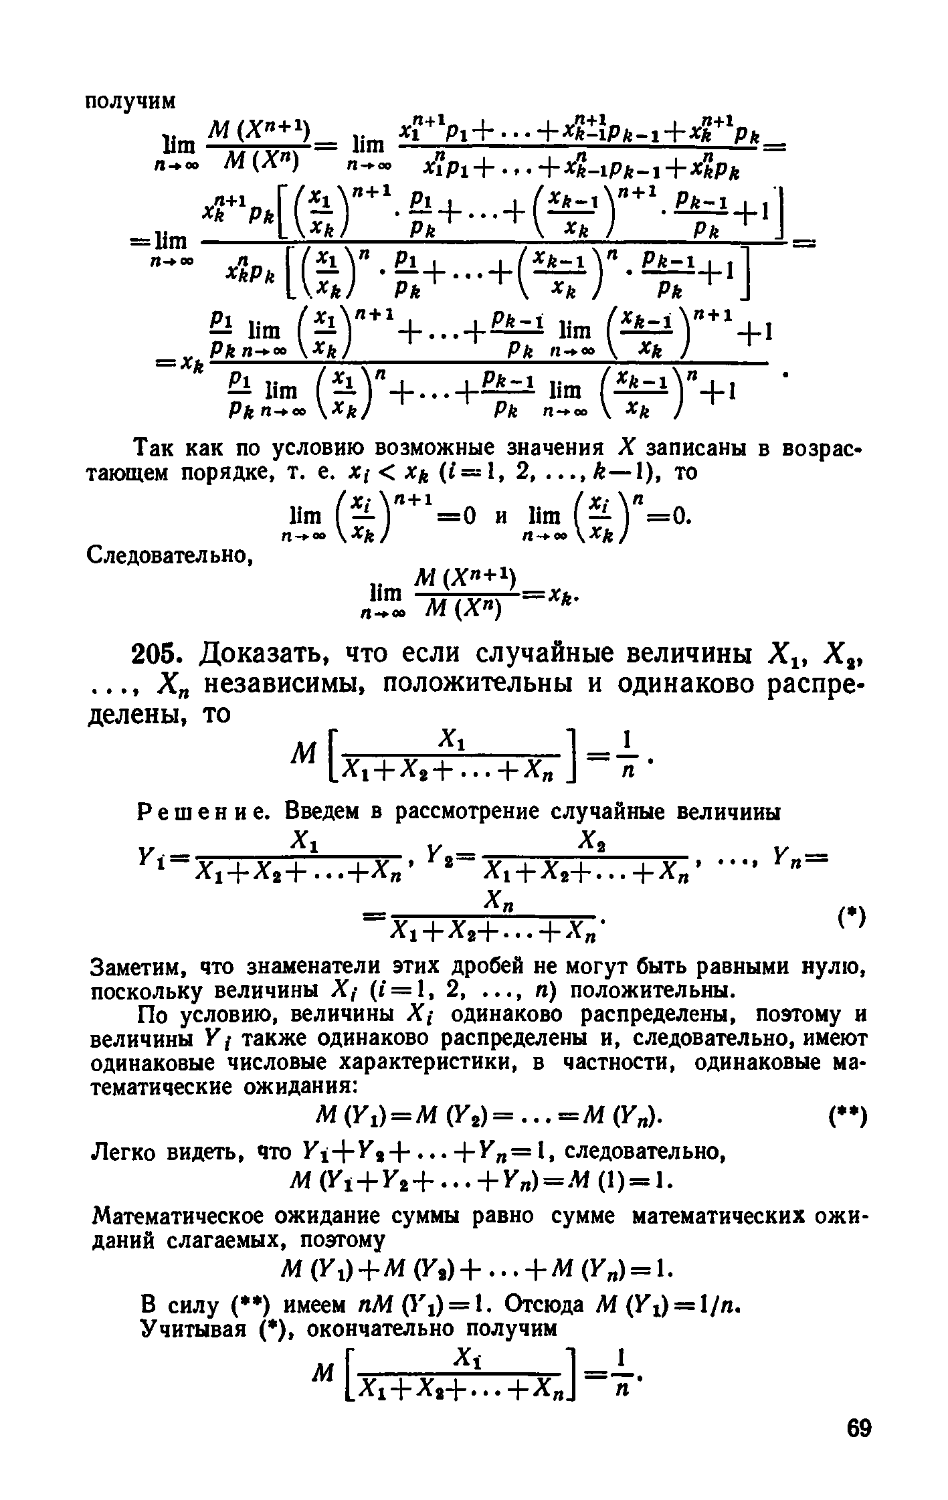 Гмурман руководство к решению задач по теории. Сборник задач по математике Гмурман 70 годы.